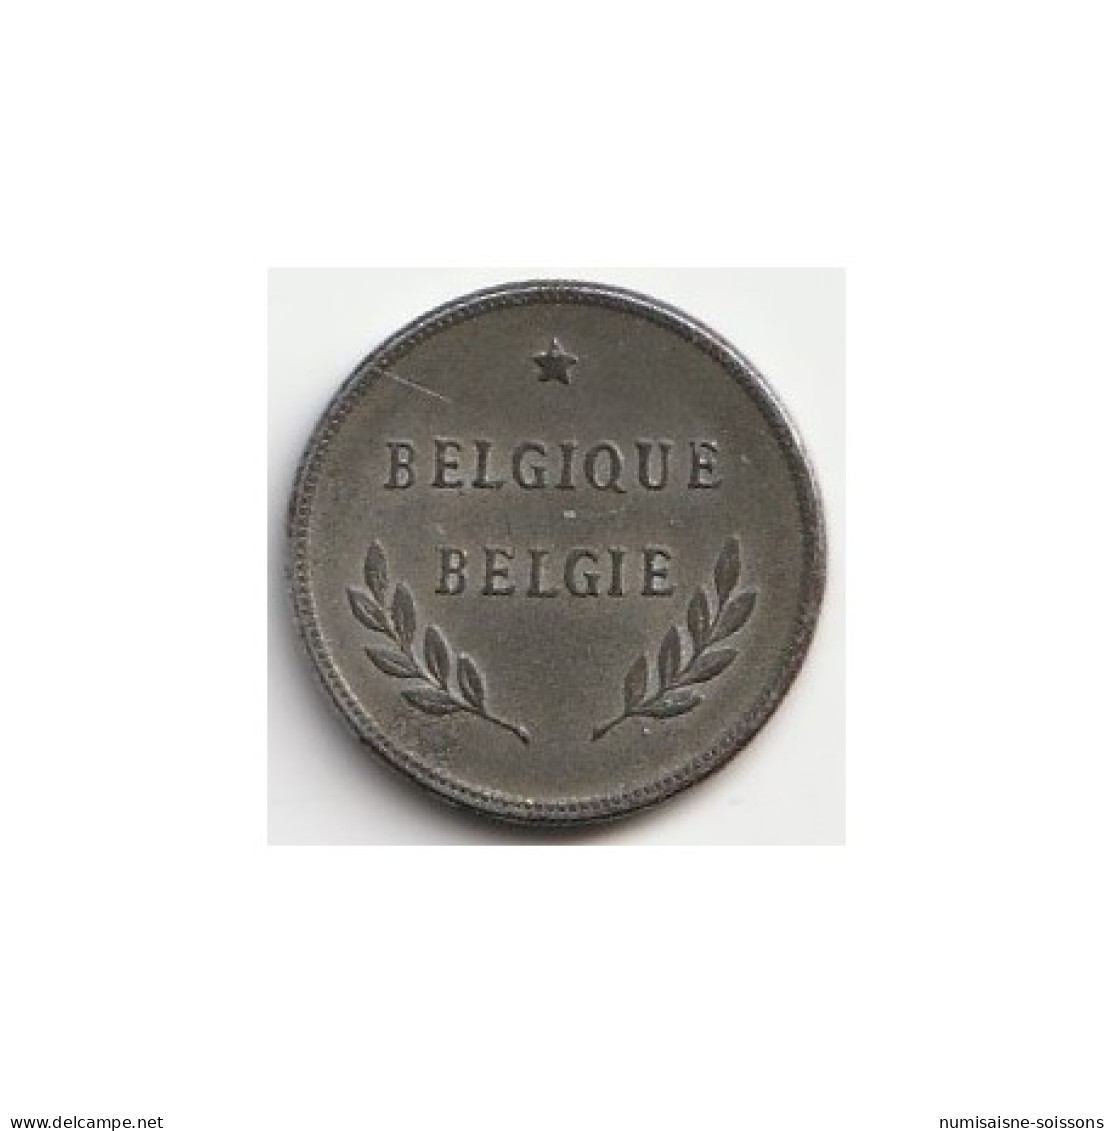 BELGIQUE - KM 133 - 2 FRANCS 1944 - TYPE LIBÉRATION - LÉOPOLD III - SPL - 2 Frank (1944 Befreiung)